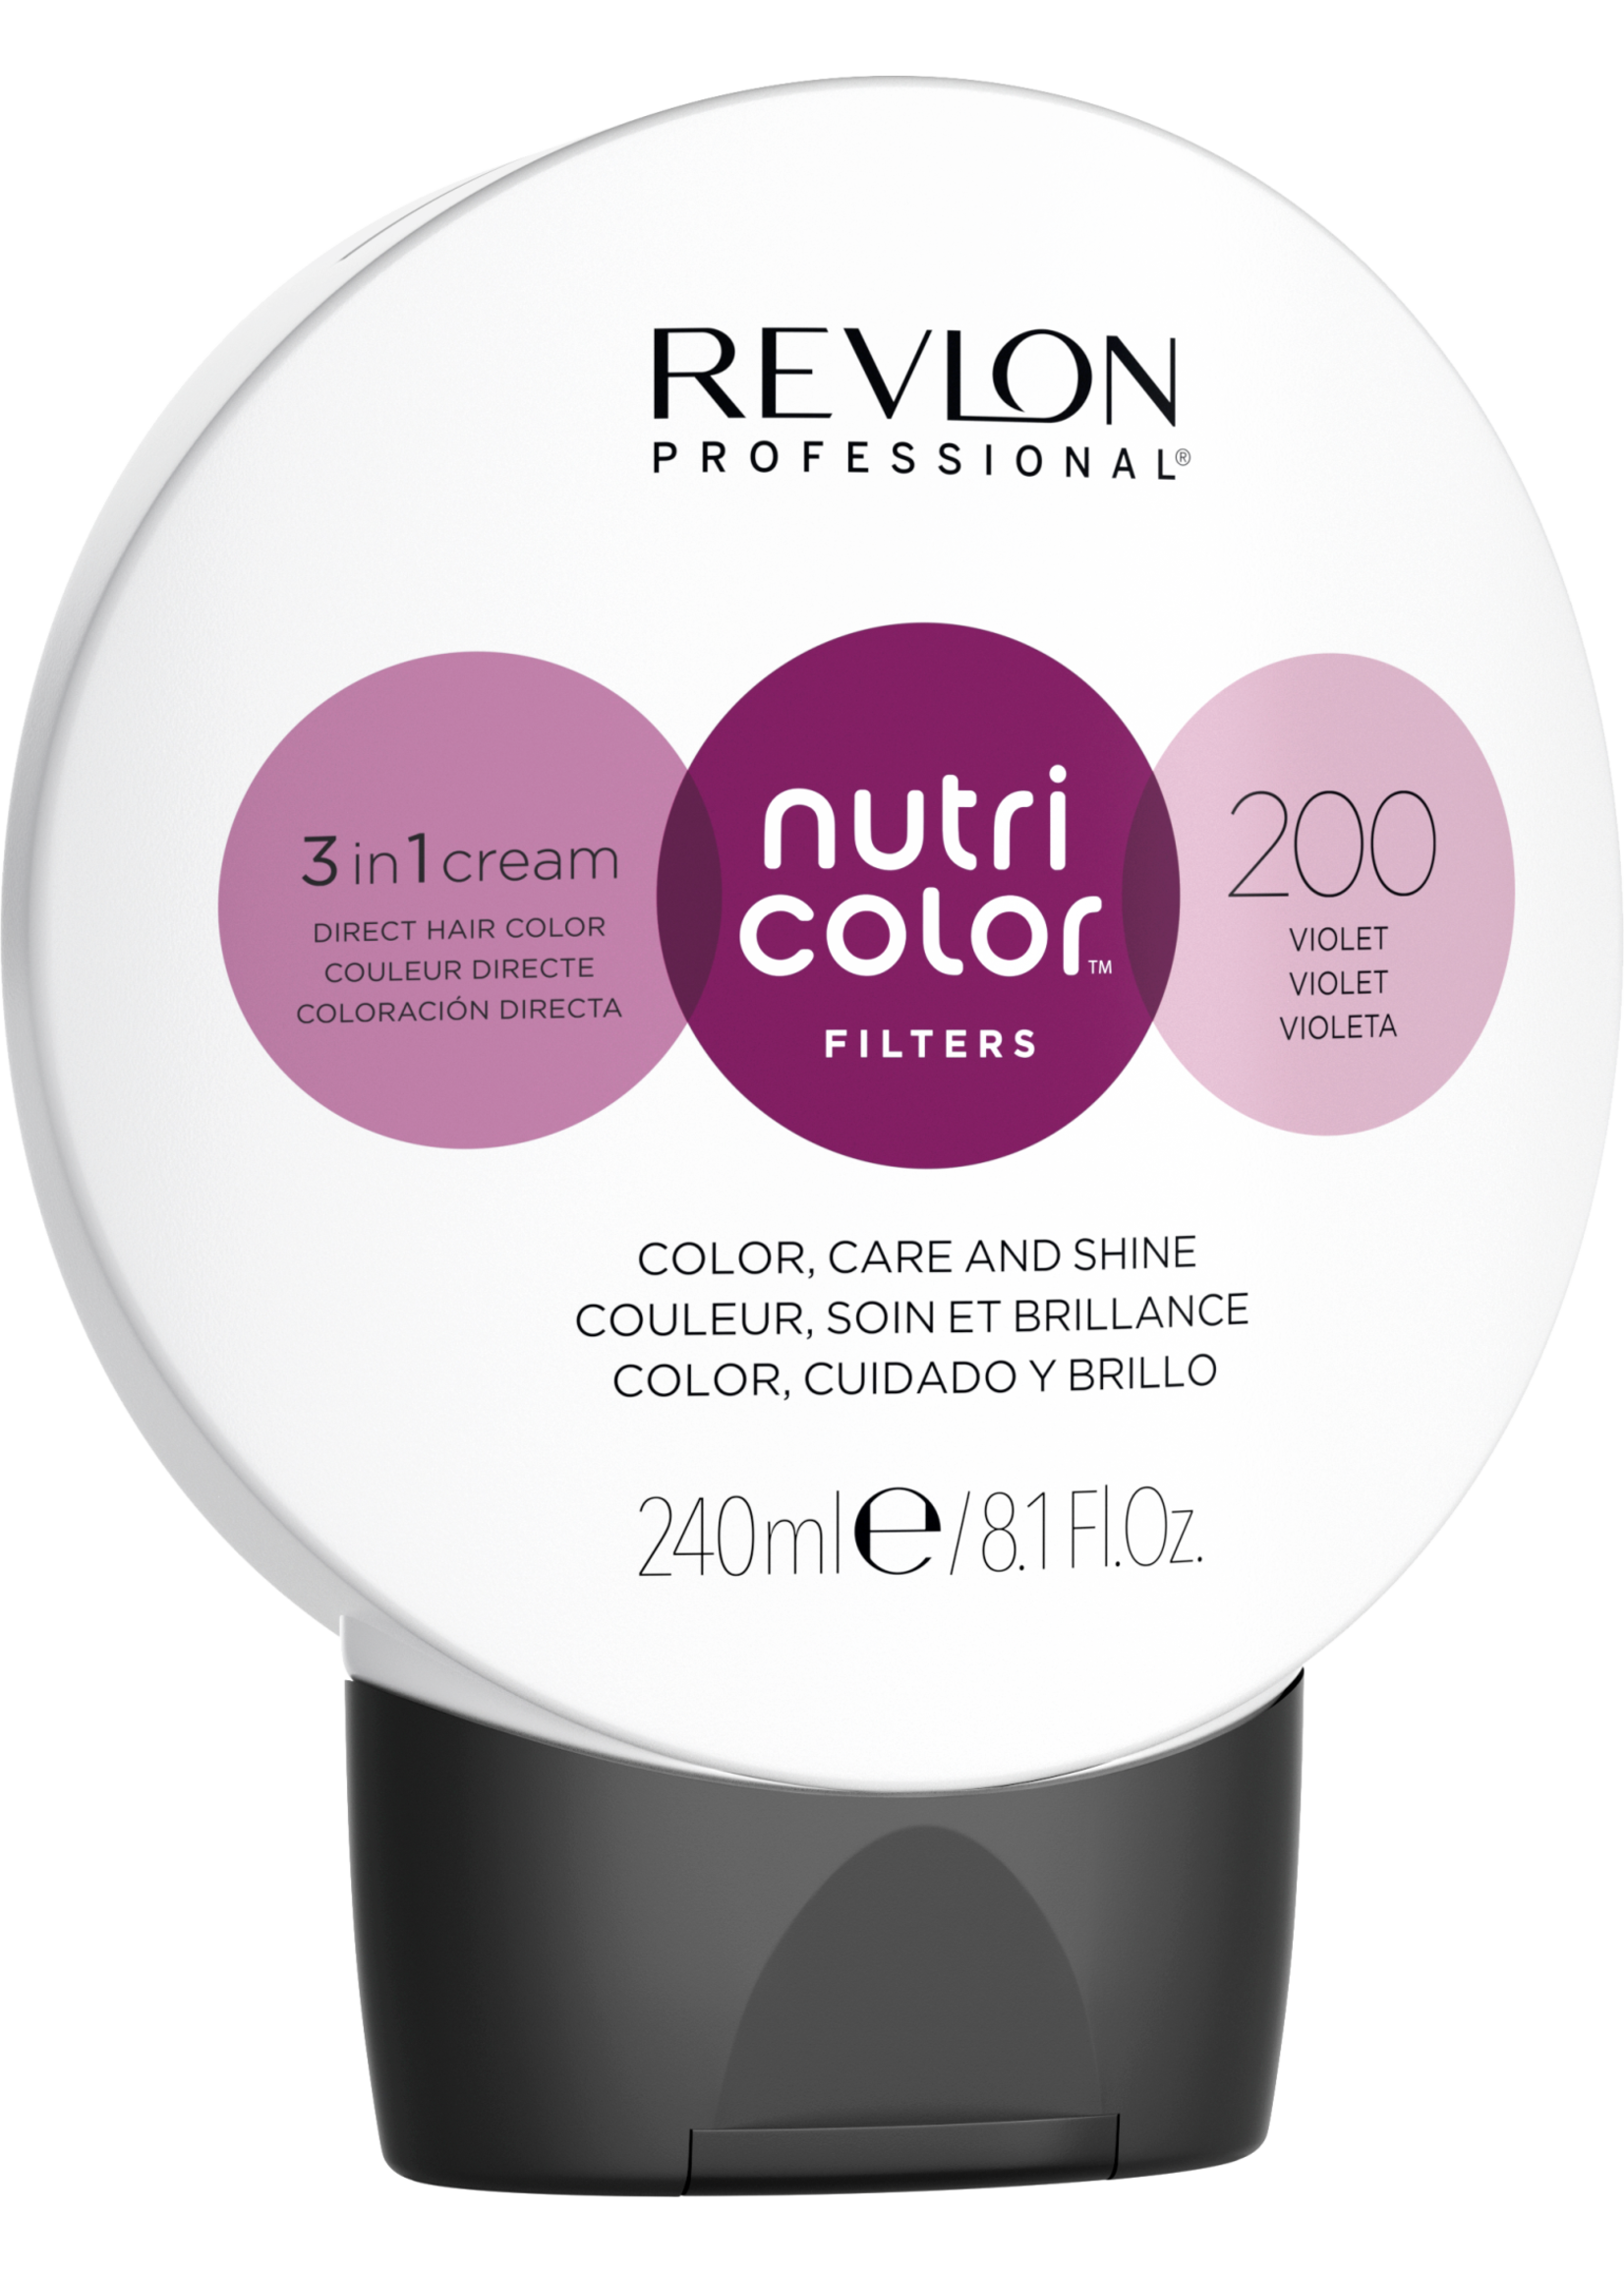 Revlon Professional Revlon Professional Nutri Color Filters 200 Violet 240ml